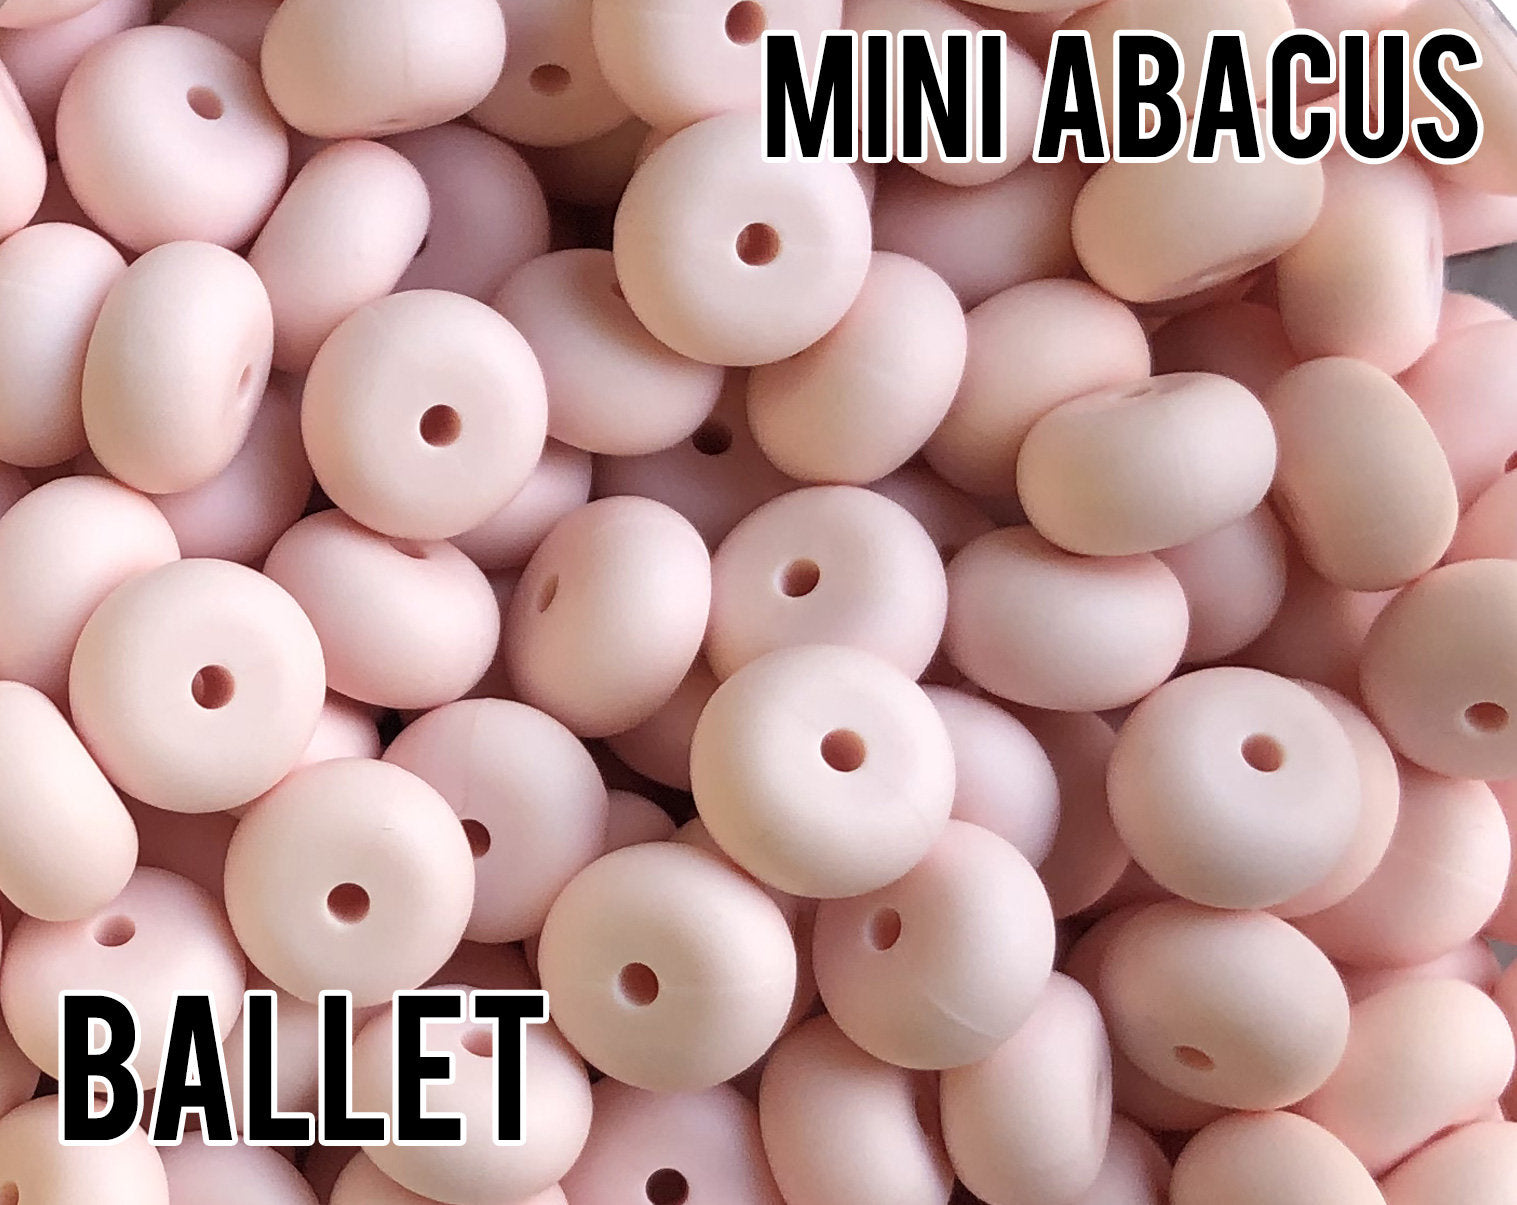 Mini Abacus Ballet (aka Light Pink, Pastel Pink) - Bulk Silicone Beads Wholesale - DIY Jewelry